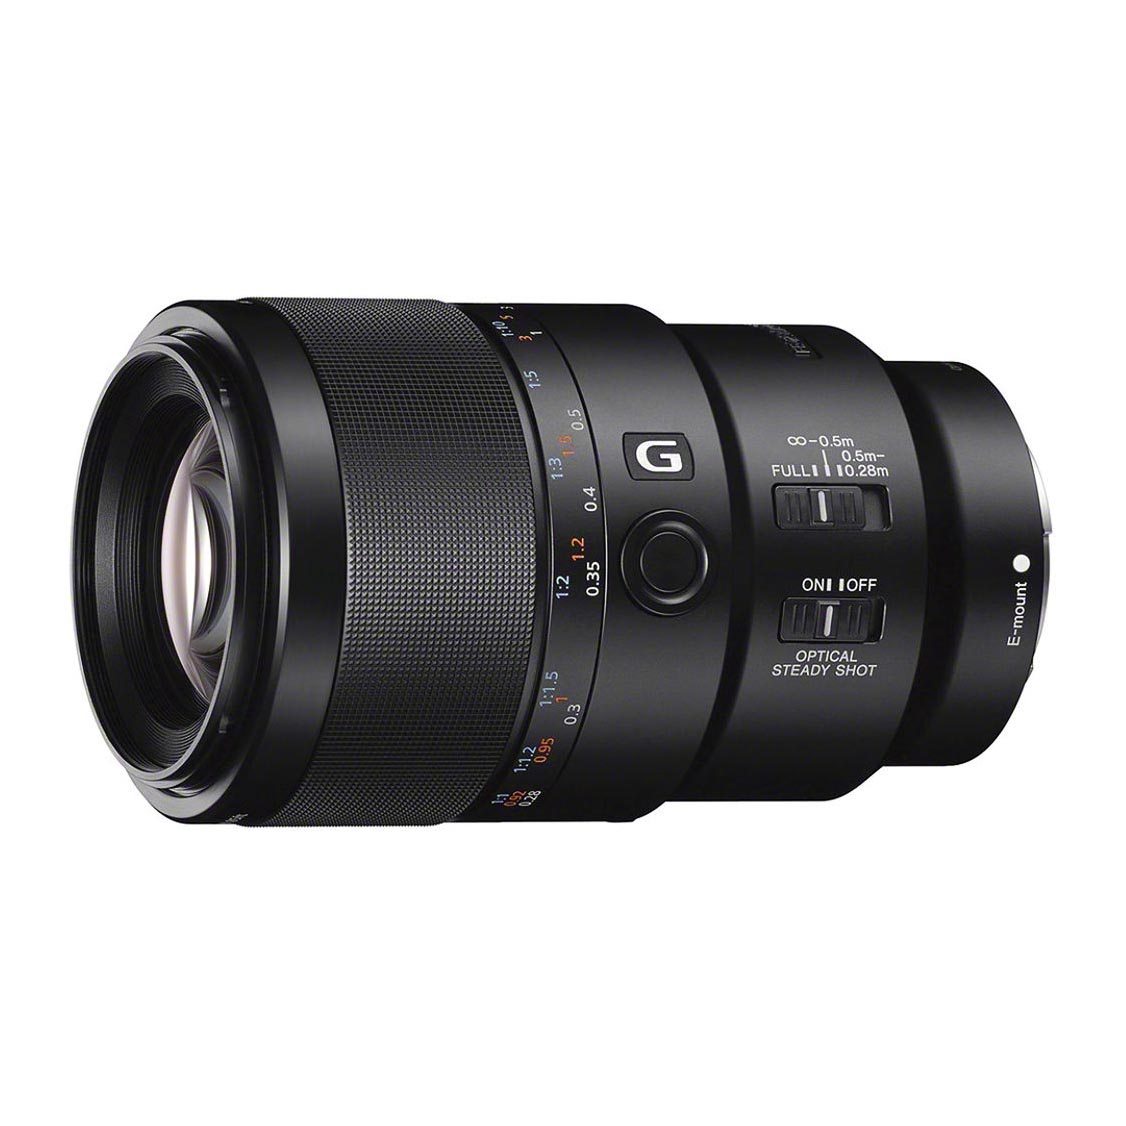 Объектив Sony FE 90mm f/2.8 Macro G OSS, черный объектив sony e 70 350mm f 4 5 6 3 g oss sel70350g